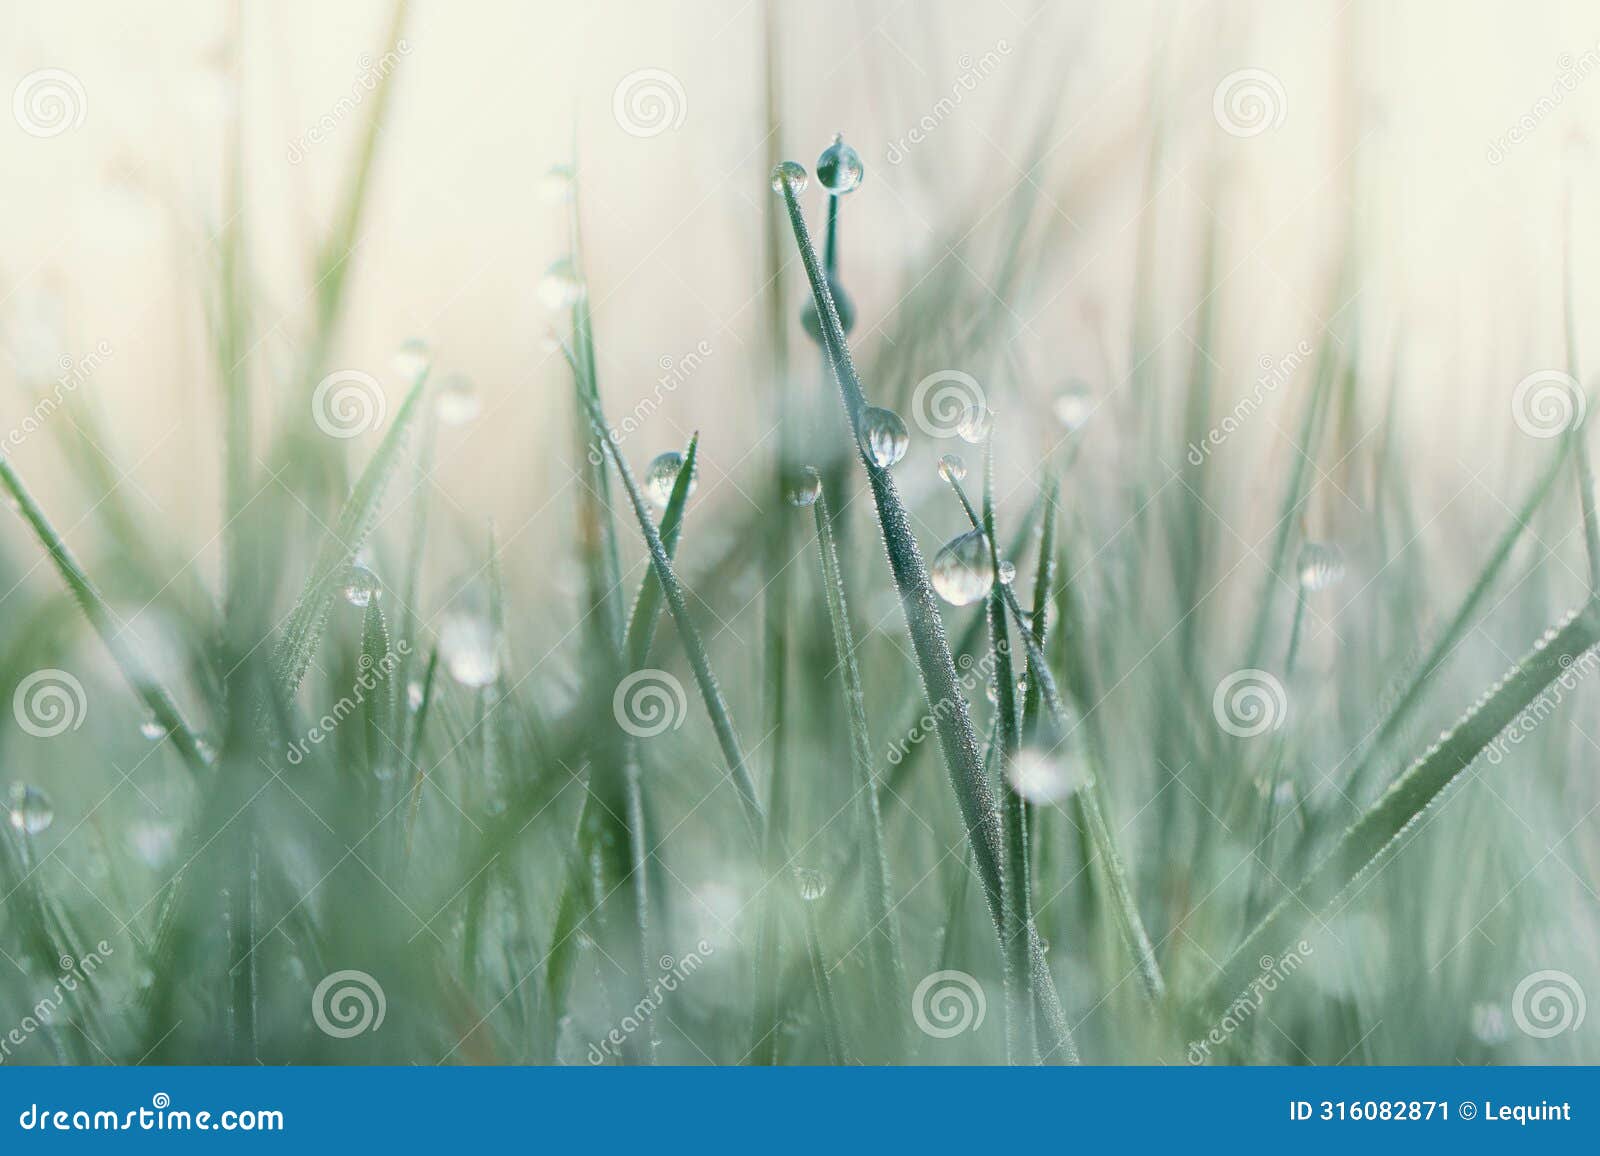 spring morning dew on new grass blades